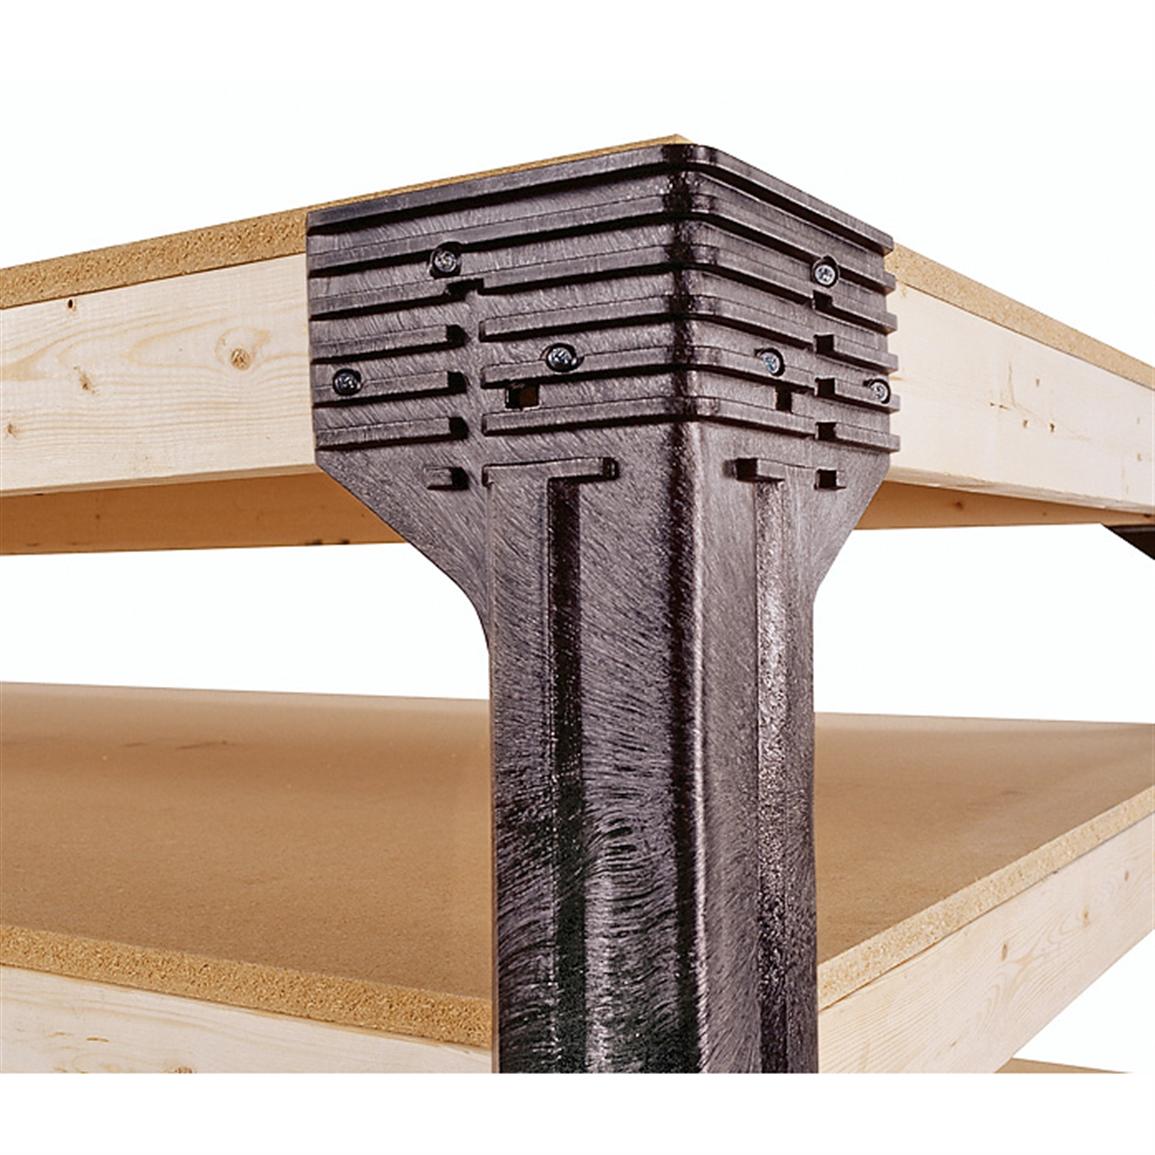 Wooden workbench legs avira with comodo firewall